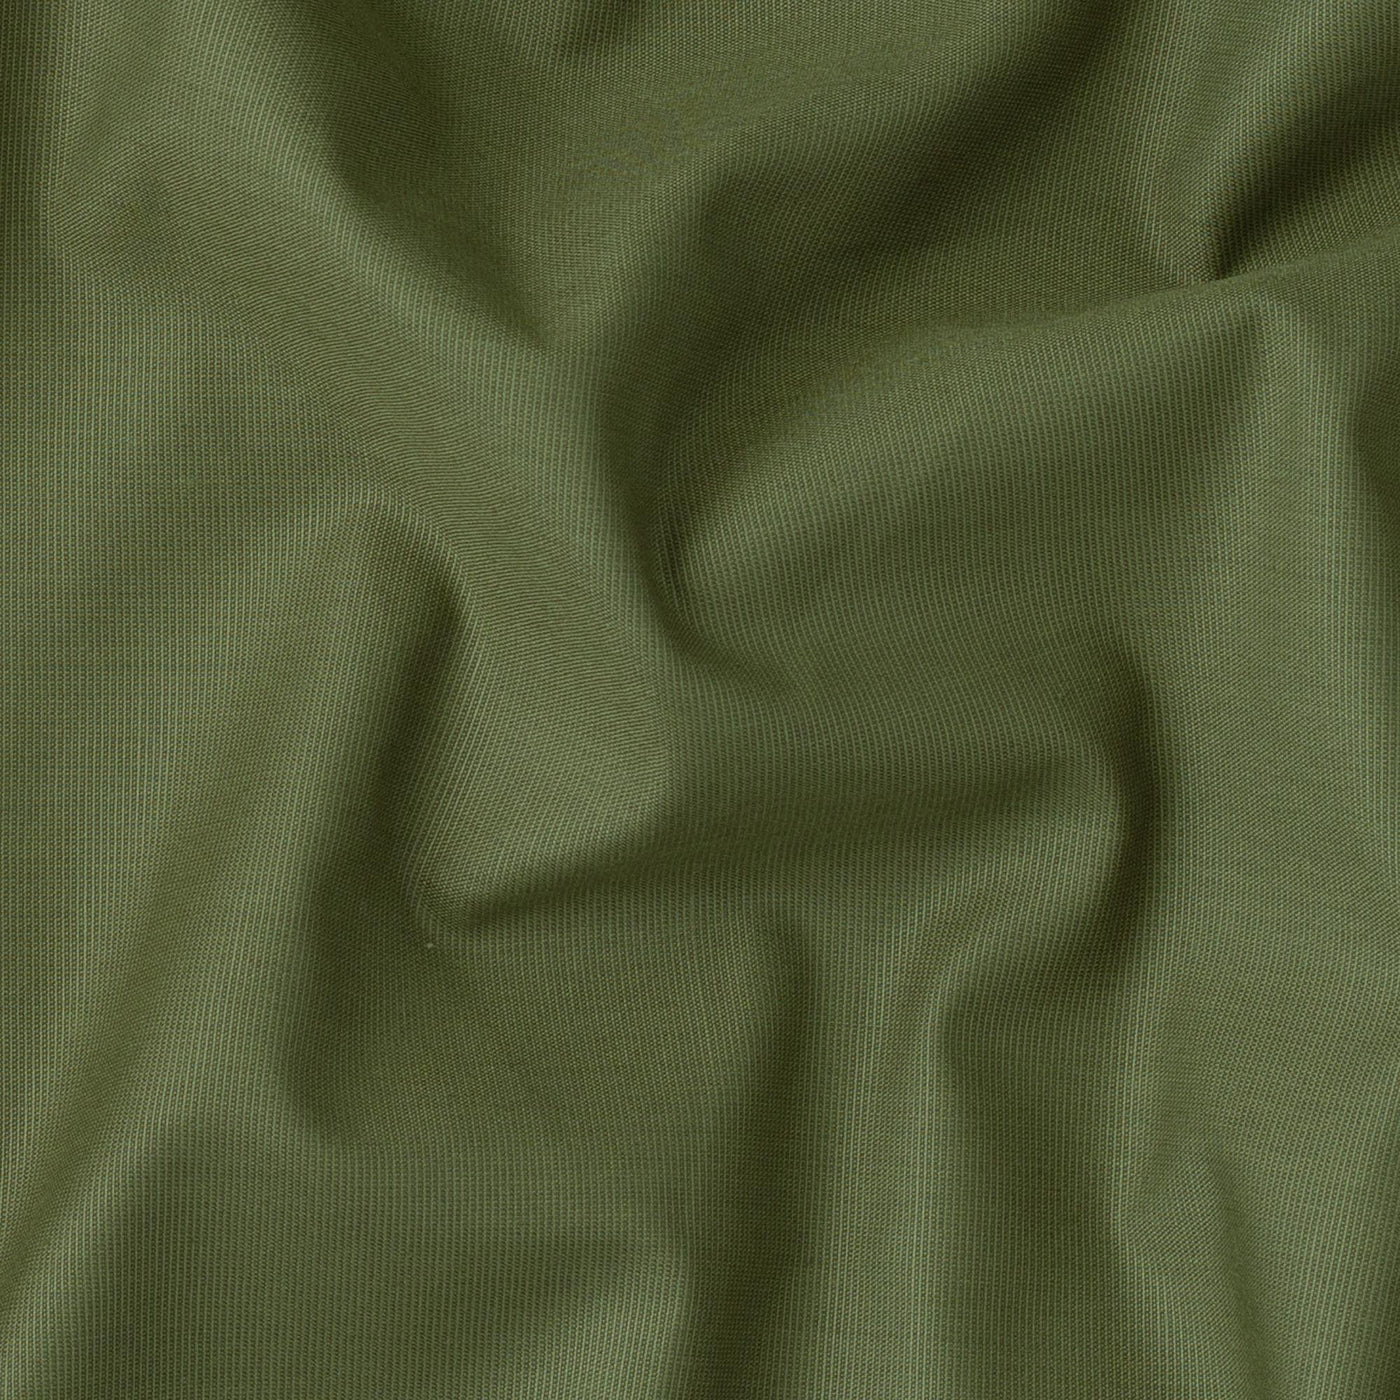 Fabric Pandit Cut Piece (CUT PIECE) Olive Green Textured Cotton Fabric (Width 58 inch)